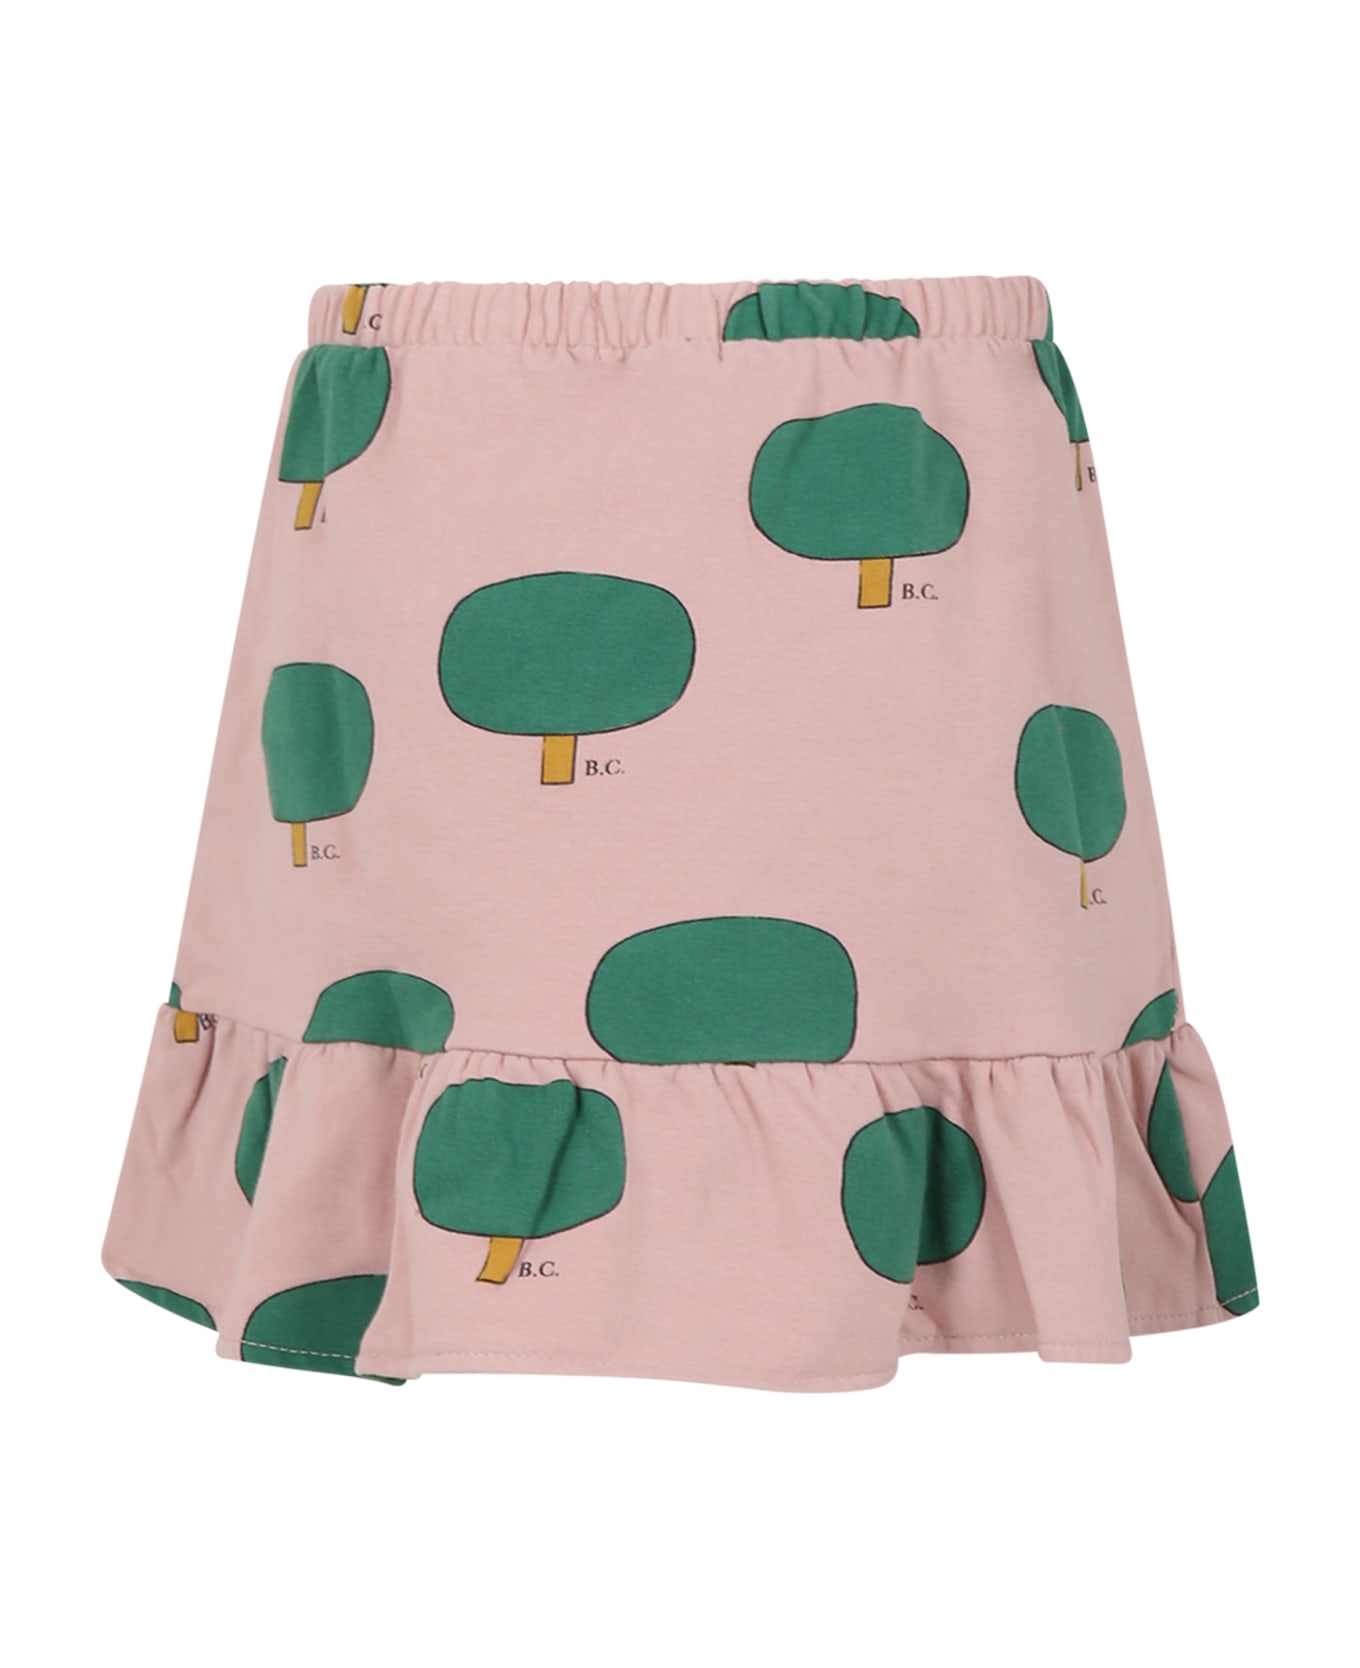 Bobo Choses Pink Skirt For Girl With Tree Print - Pink